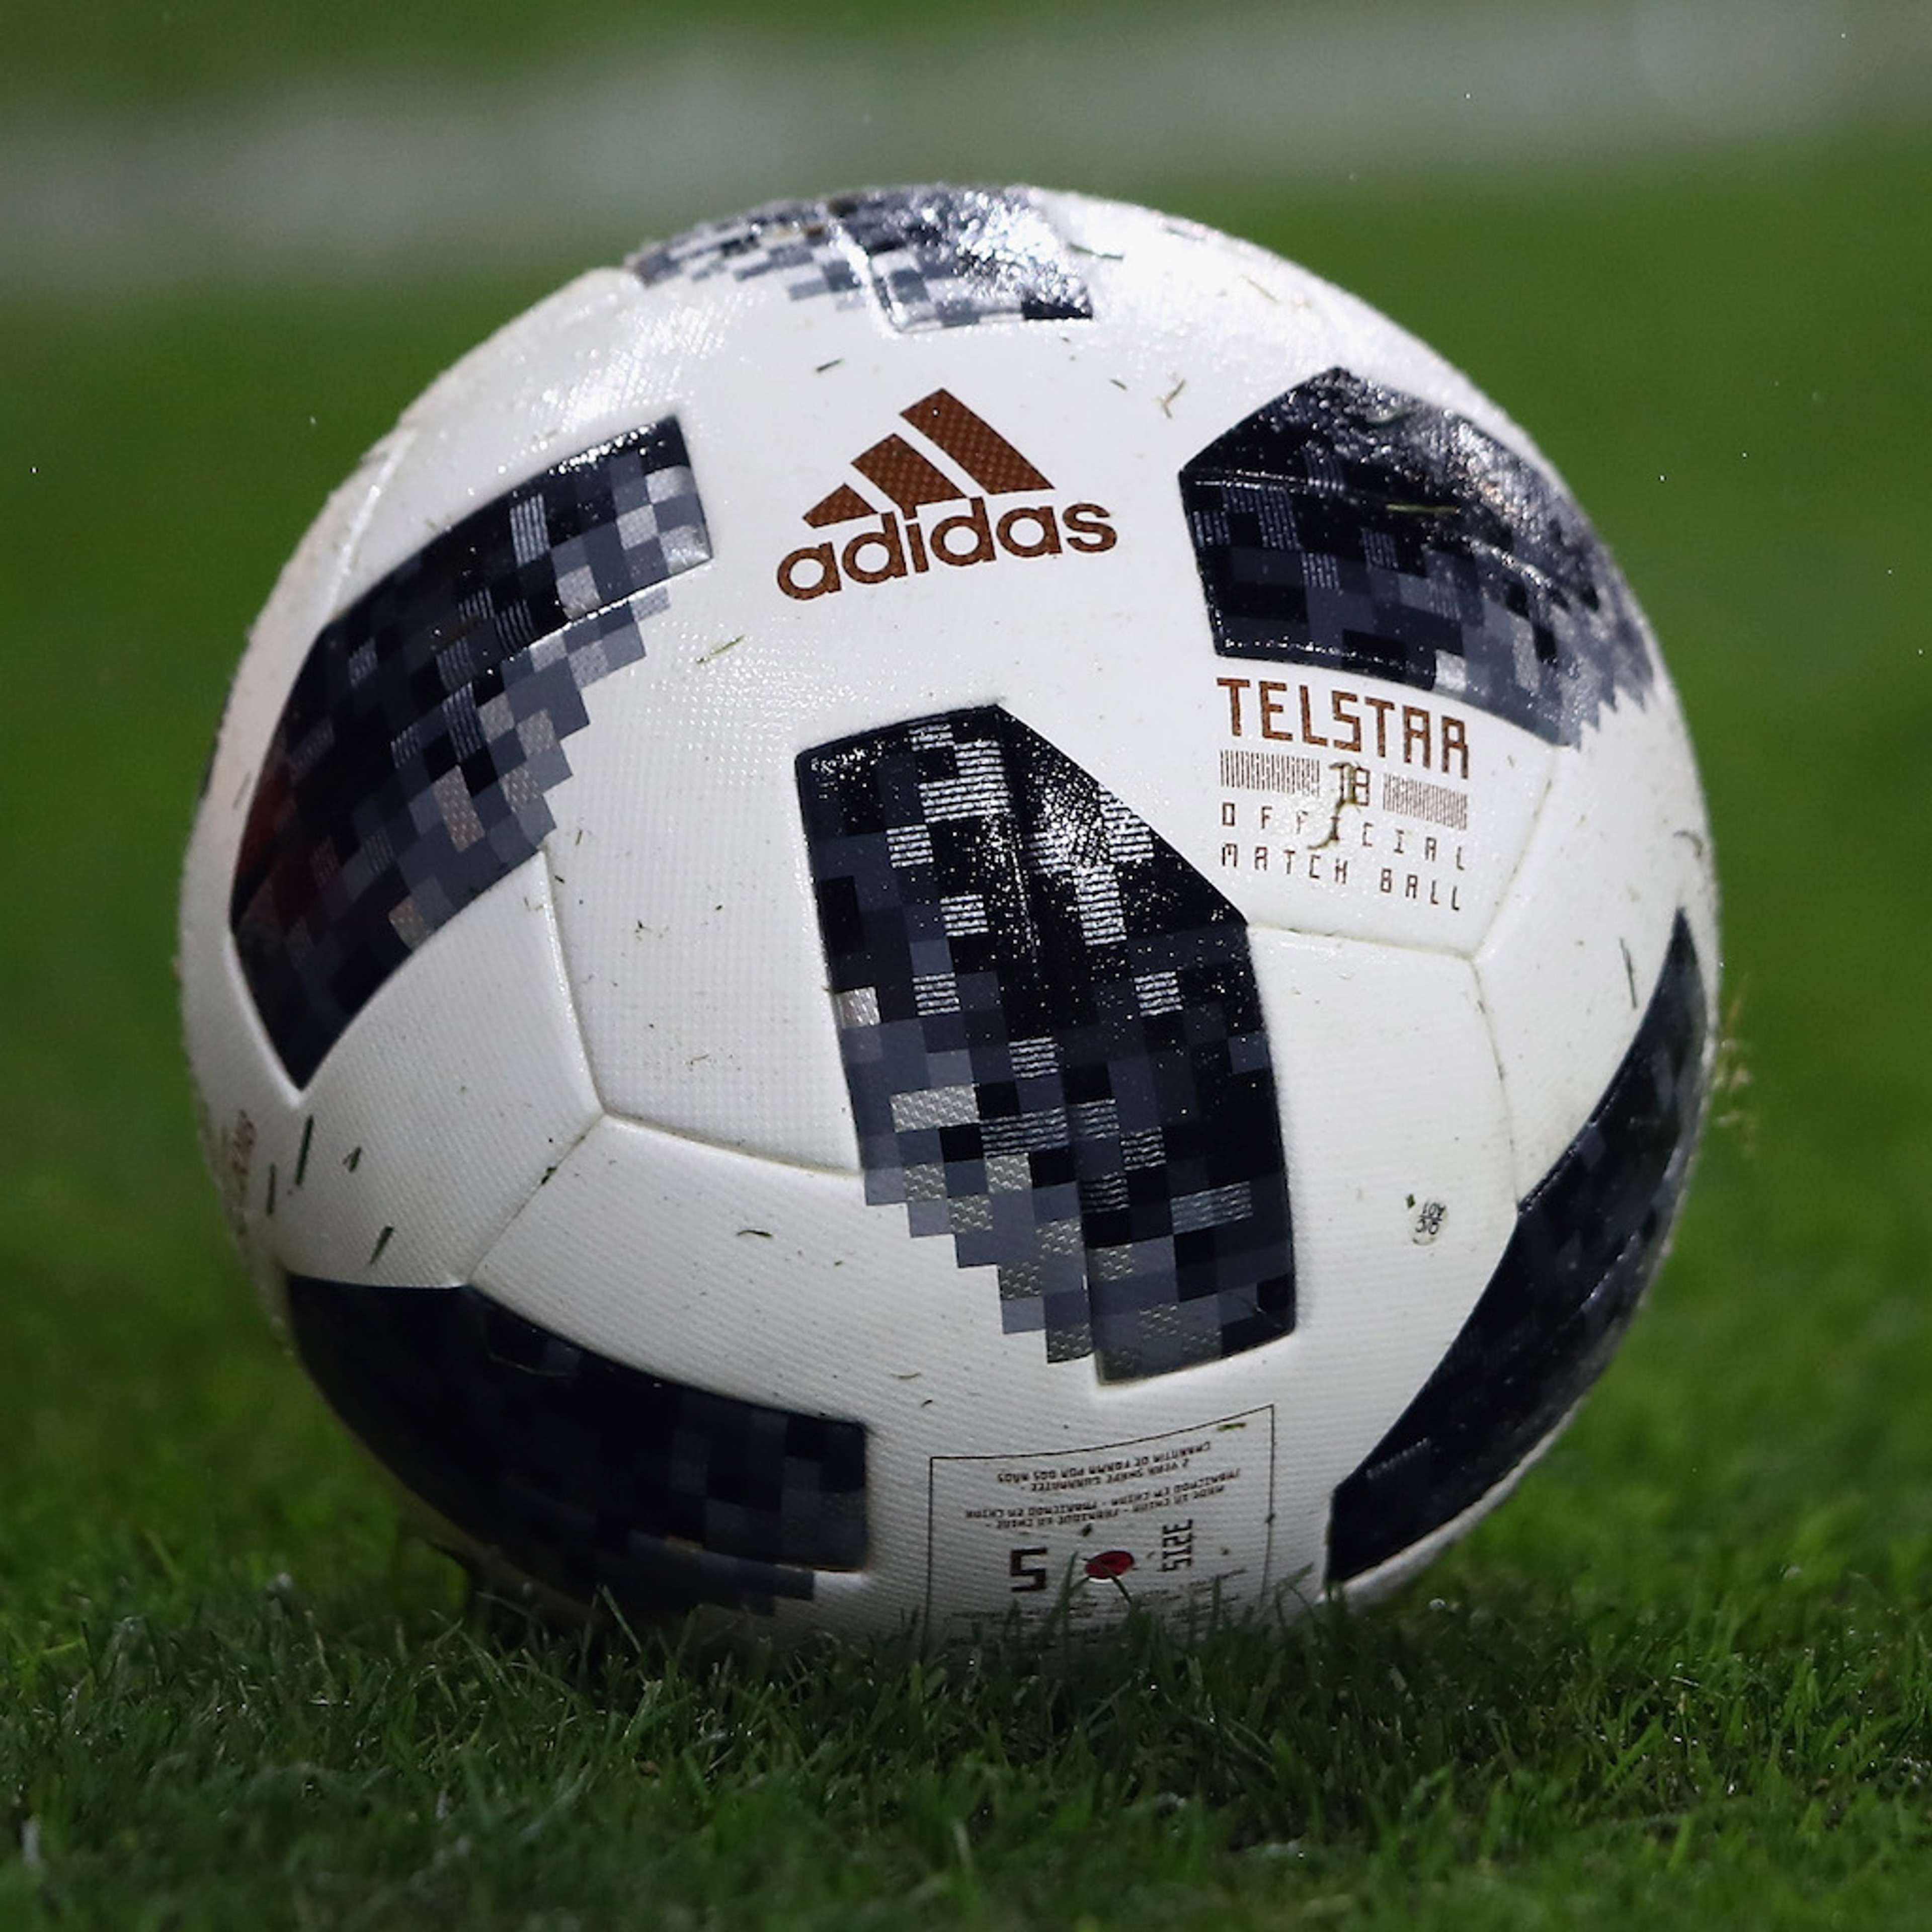 Adidas Telstar 18 2018 World Cup ball